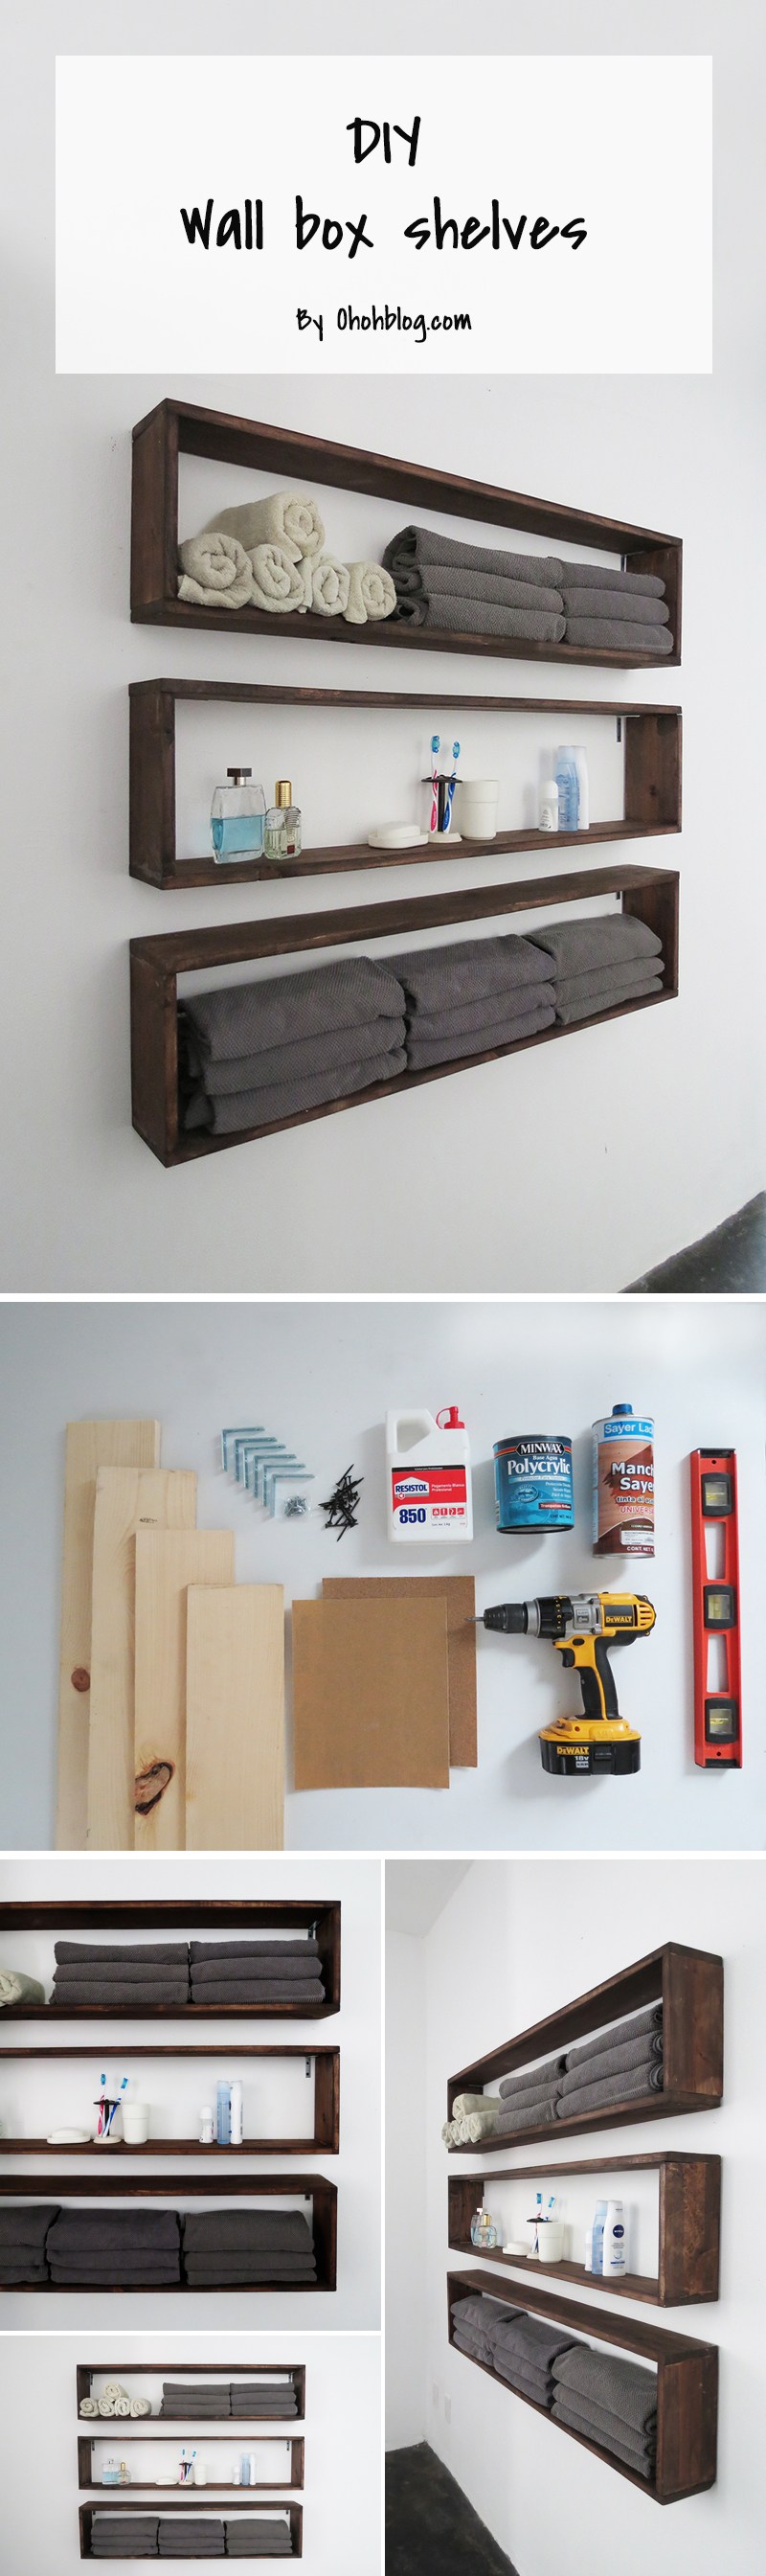 DIY Wall Box Shelves